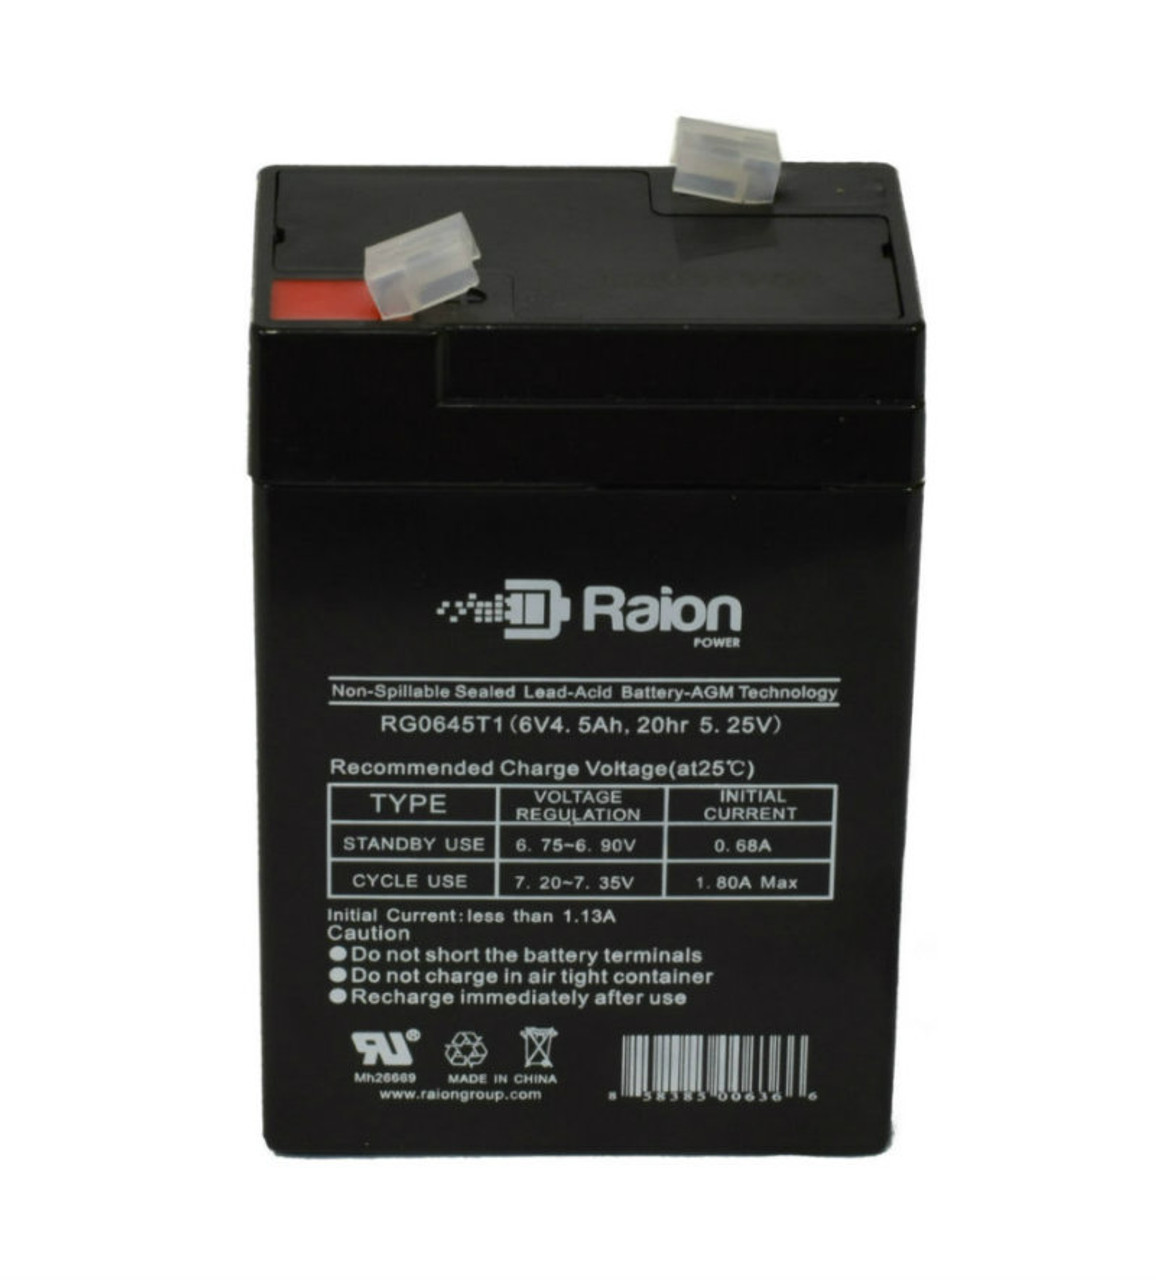 Raion Power RG0645T1 Replacement Battery Cartridge for Wonderlanes 2731 Mack Truck